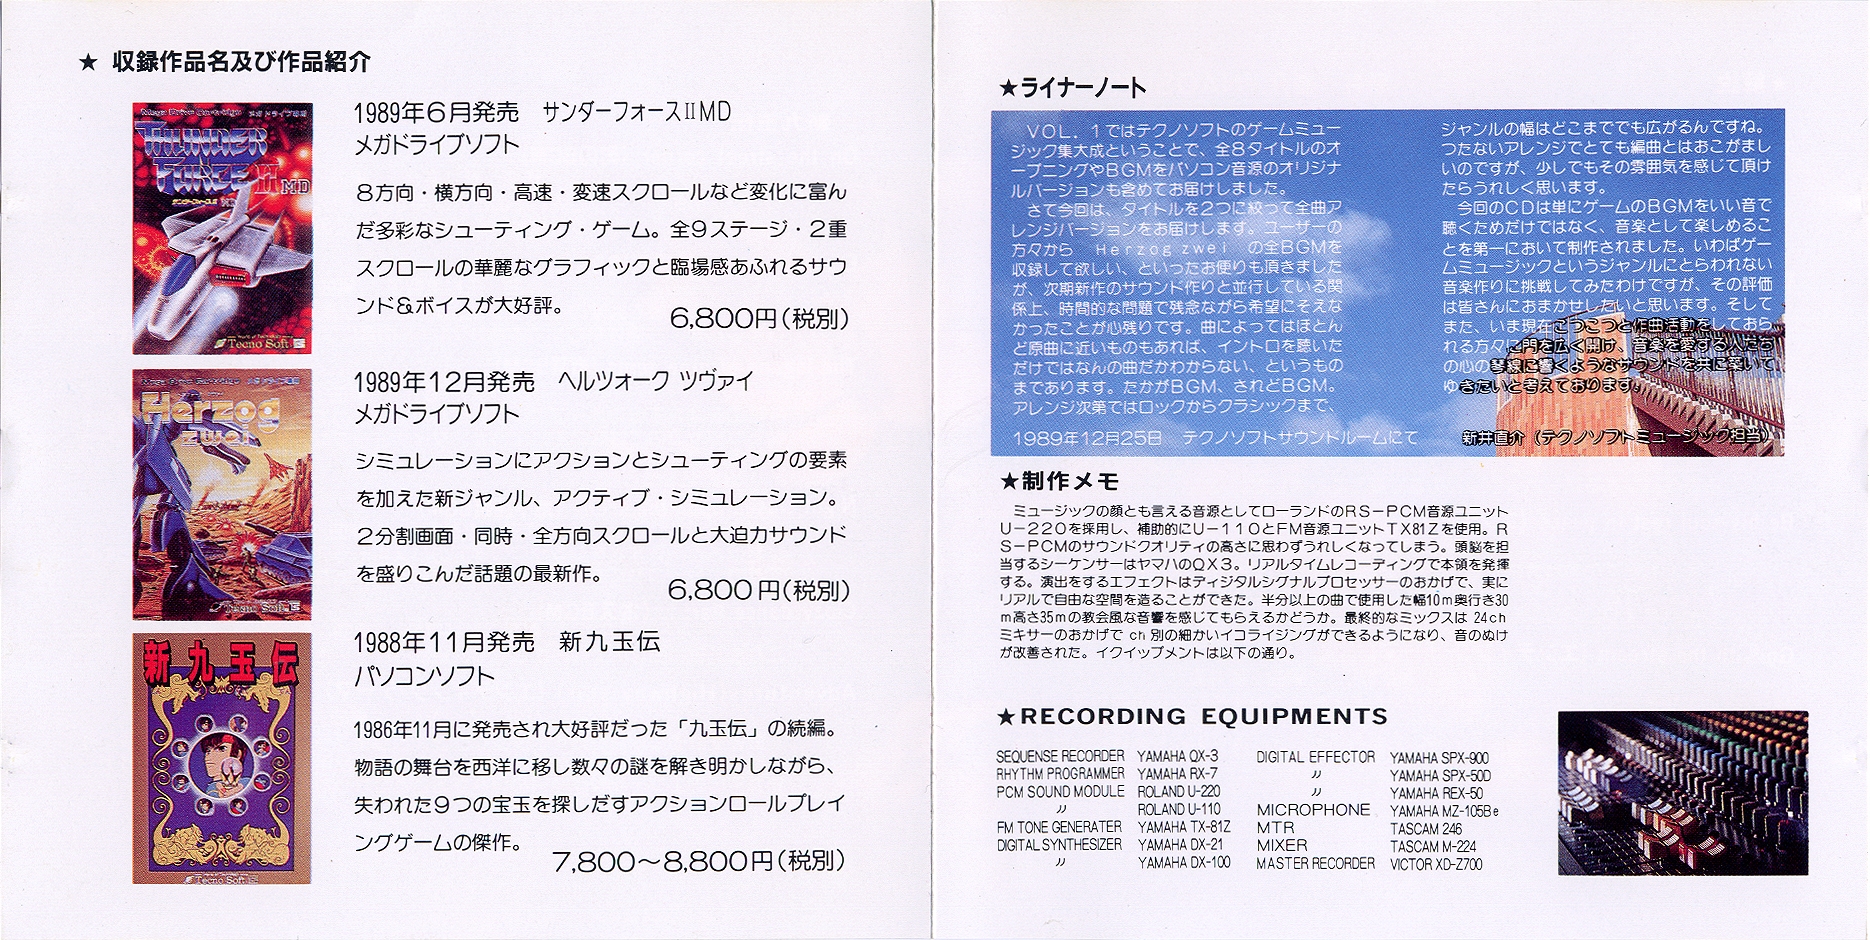 Excursion/TECNO SOFT GAME MUSIC COLLECTION VOL.2 (1990) MP3 